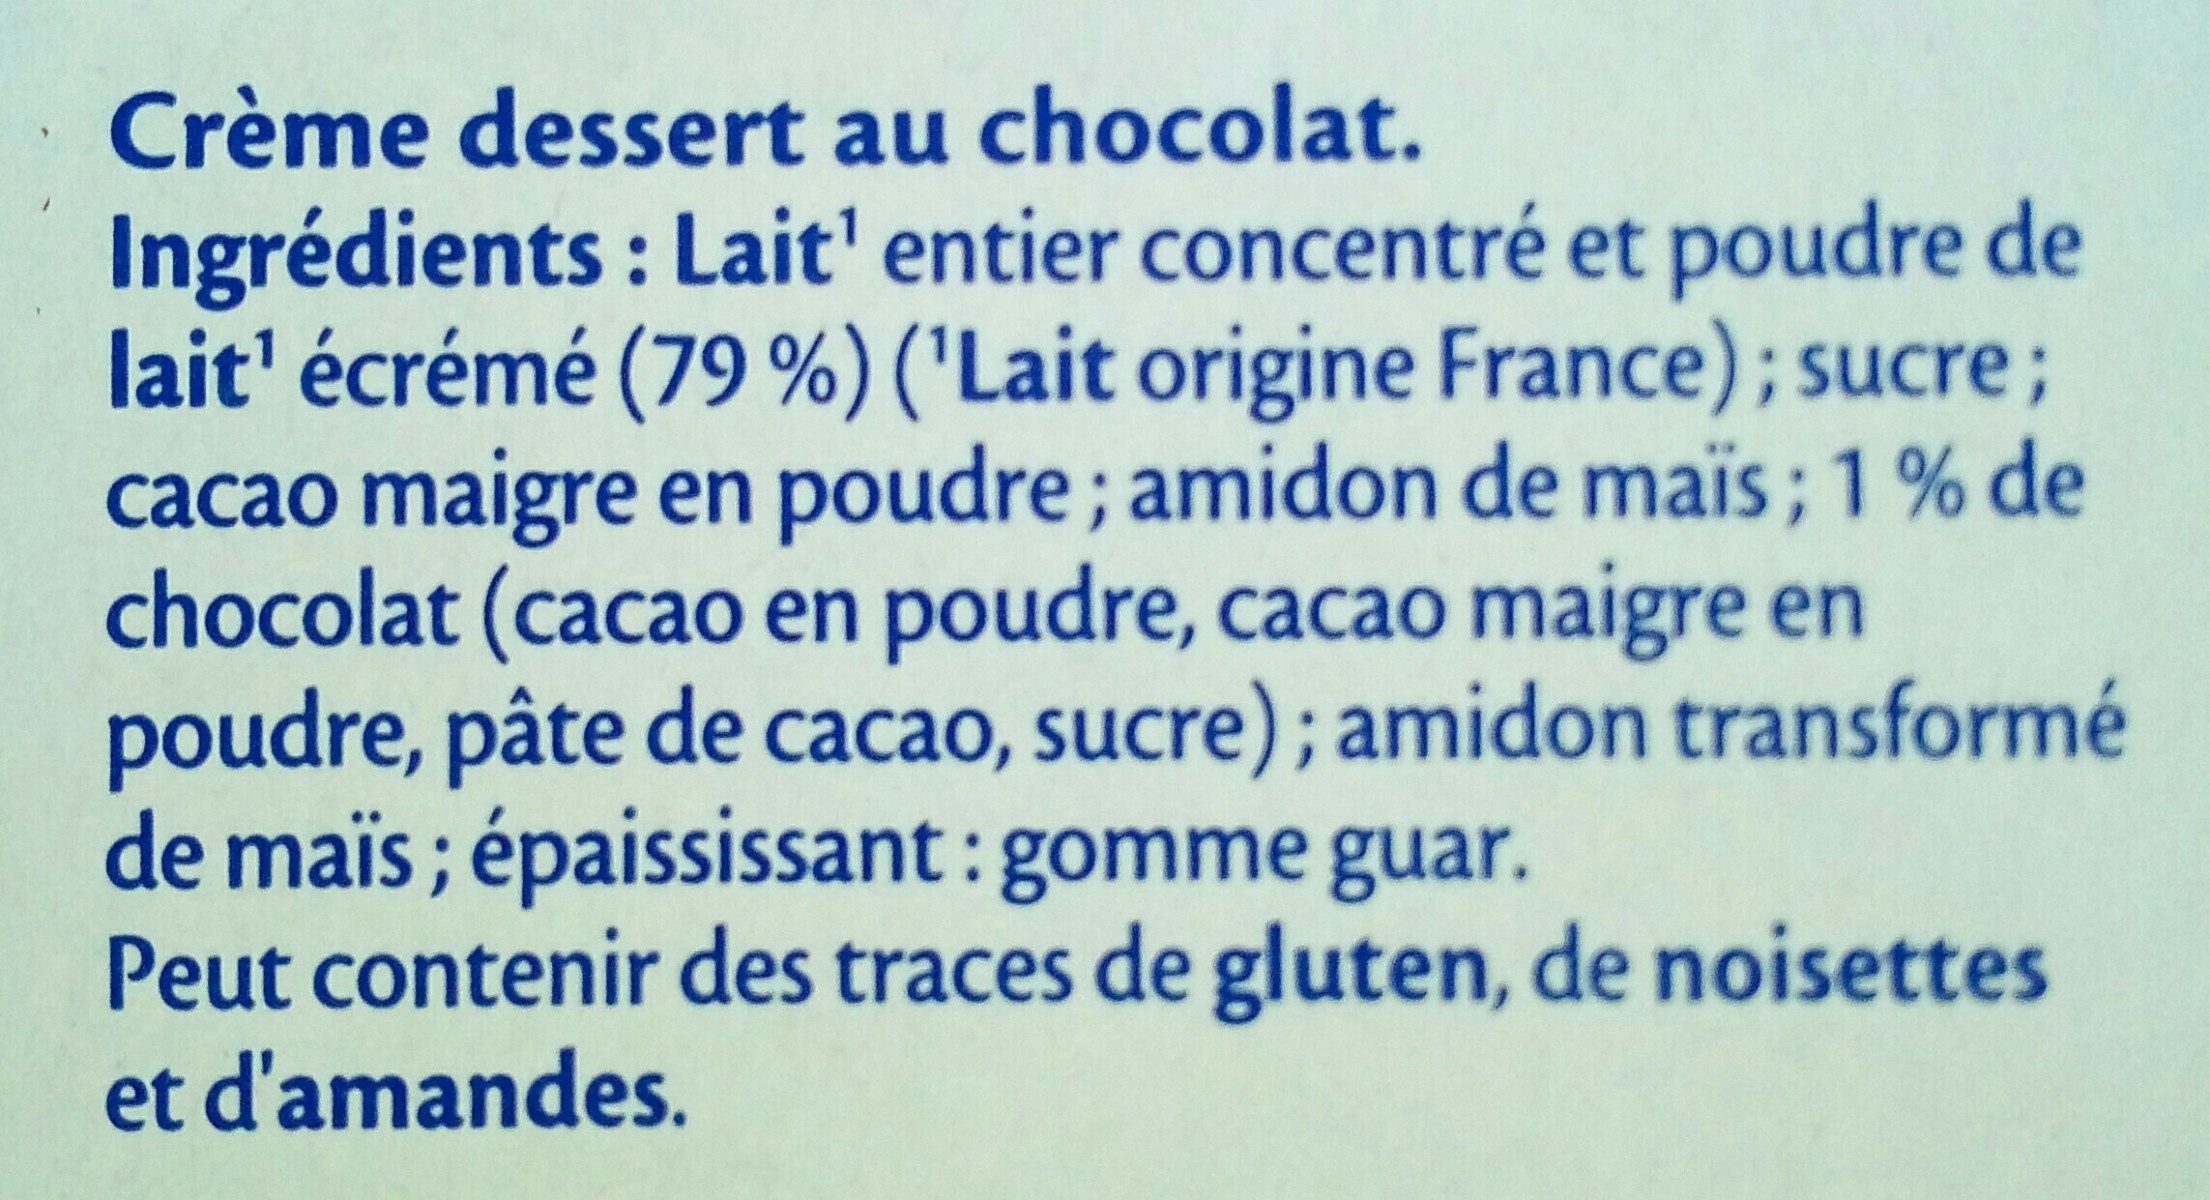 MONT BLANC Crème dessert Coupelles Chocolat 4x125g - Ingredienser - fr